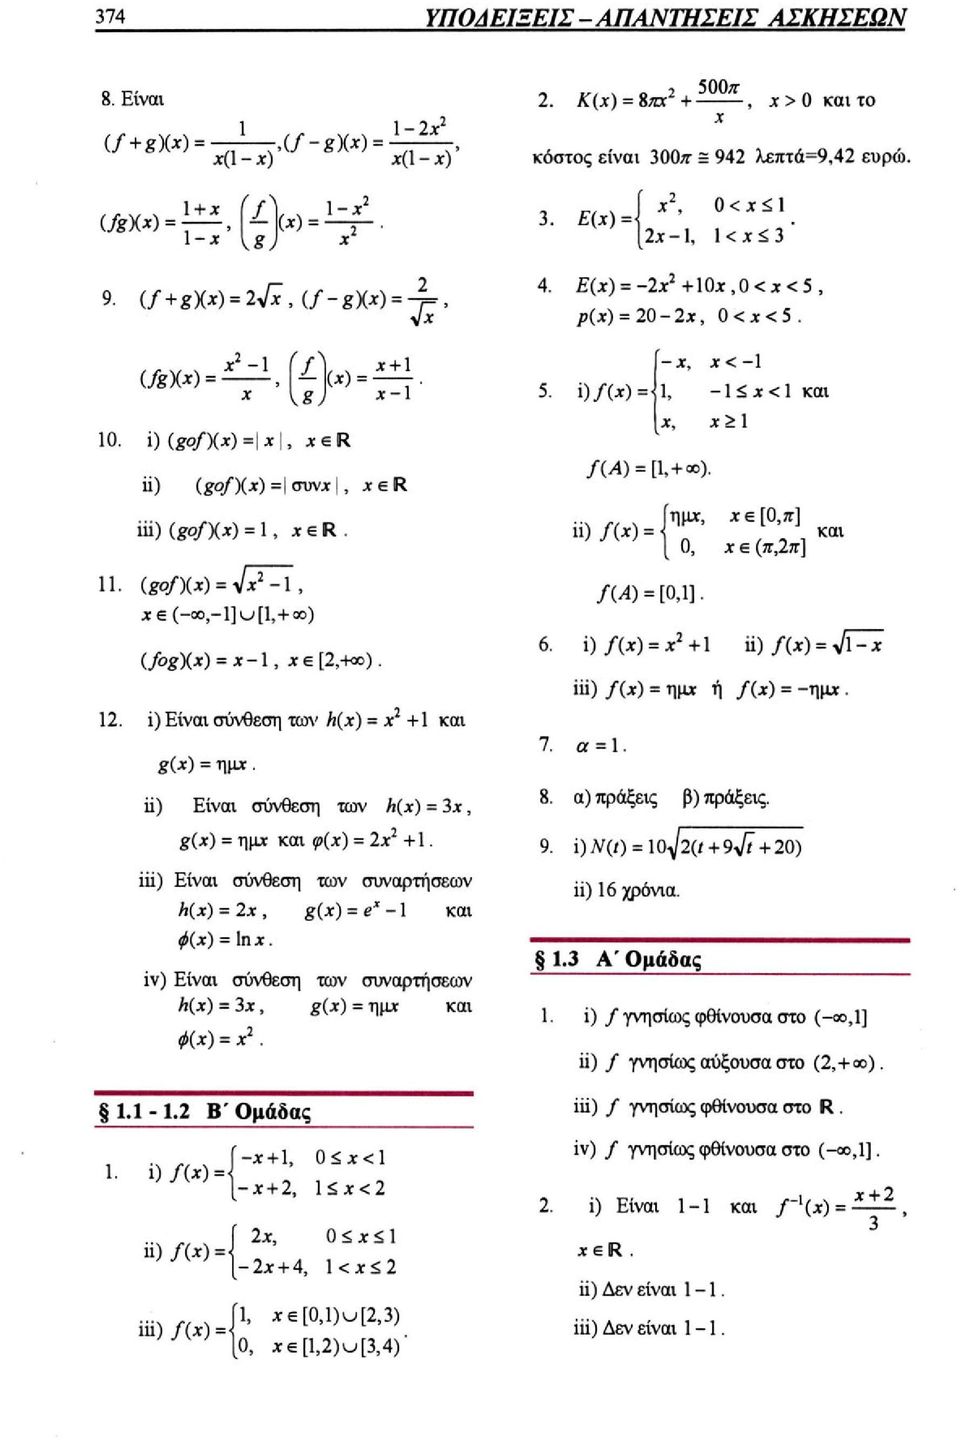 iv) Είναι σύνθεση των συναρτήσεων h(x) = 3x, g(x) = ημx και φ(x) = x 2. iii) f(x) = ημx ή f(x) = -ημx. α = 8. α) πράξεις β) πράξεις. 9.